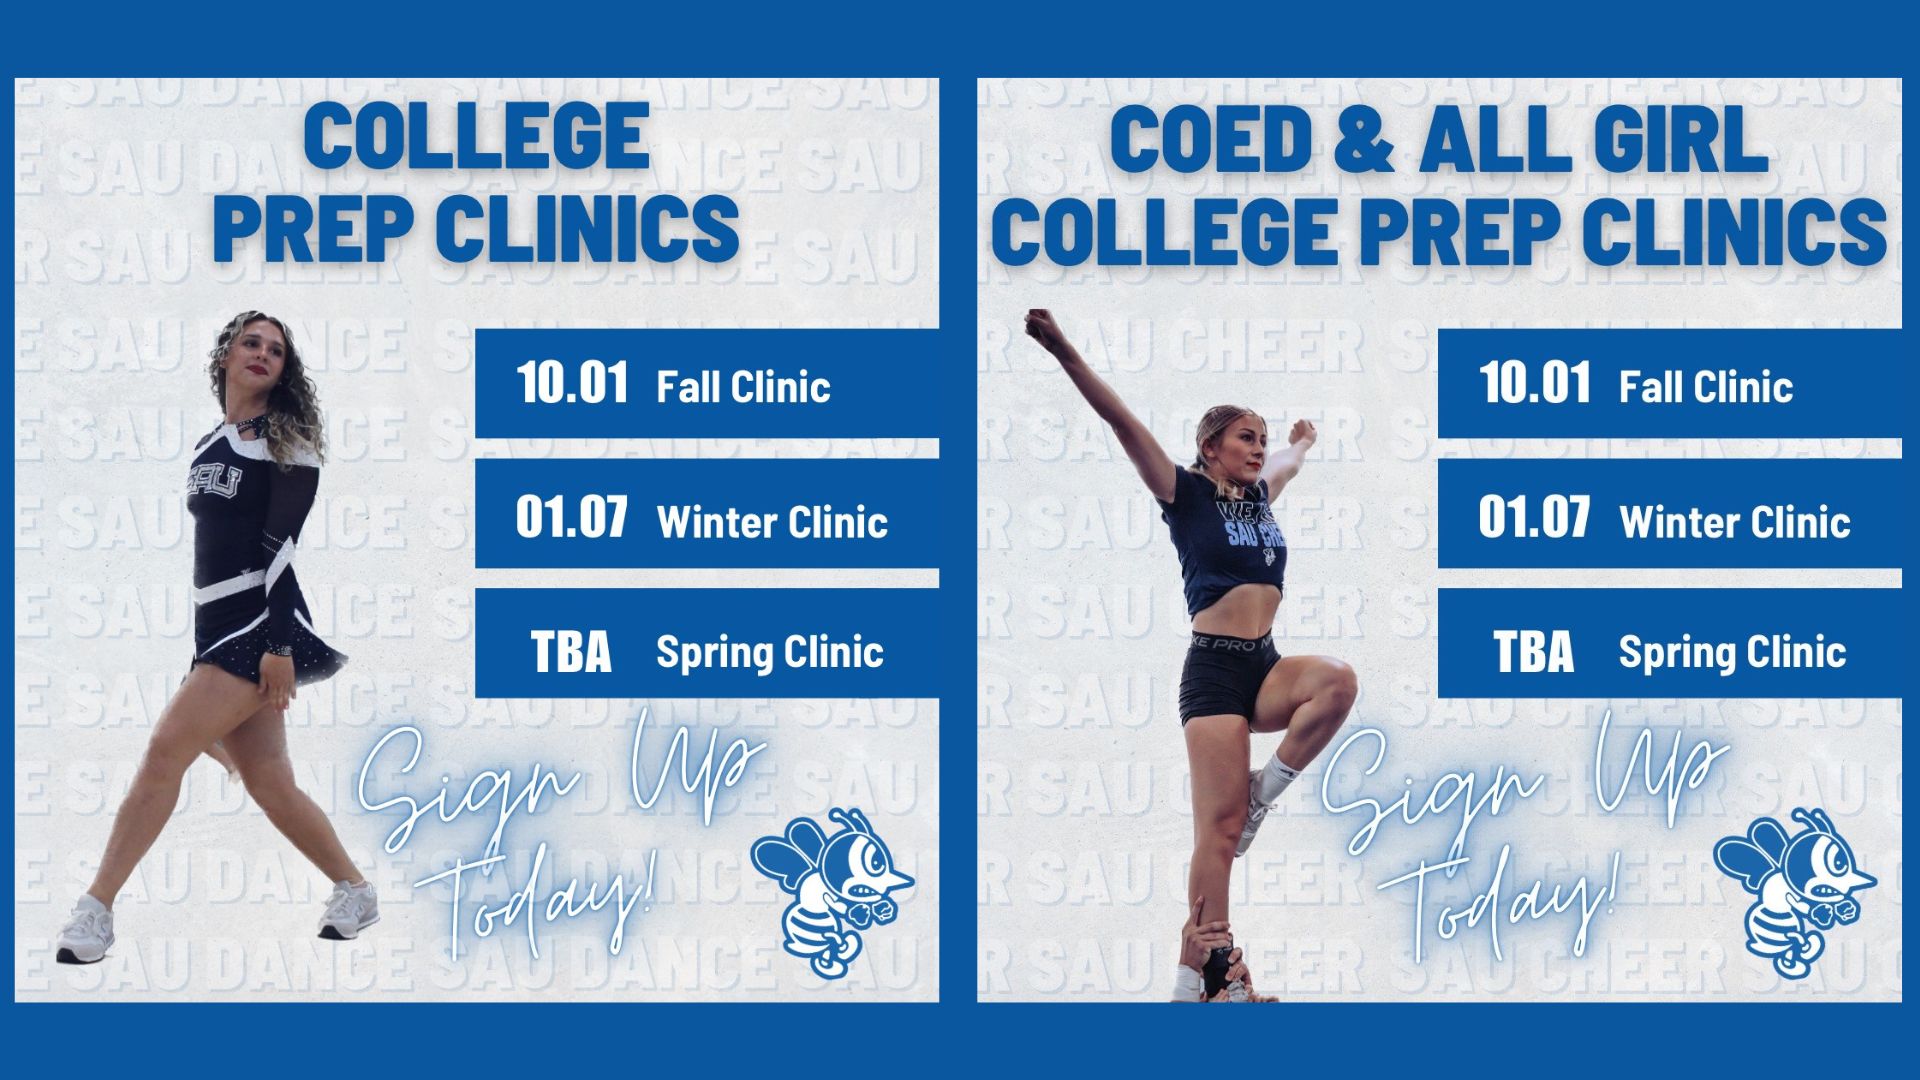 Register for SAU Cheer & Dance College Prep Clinics